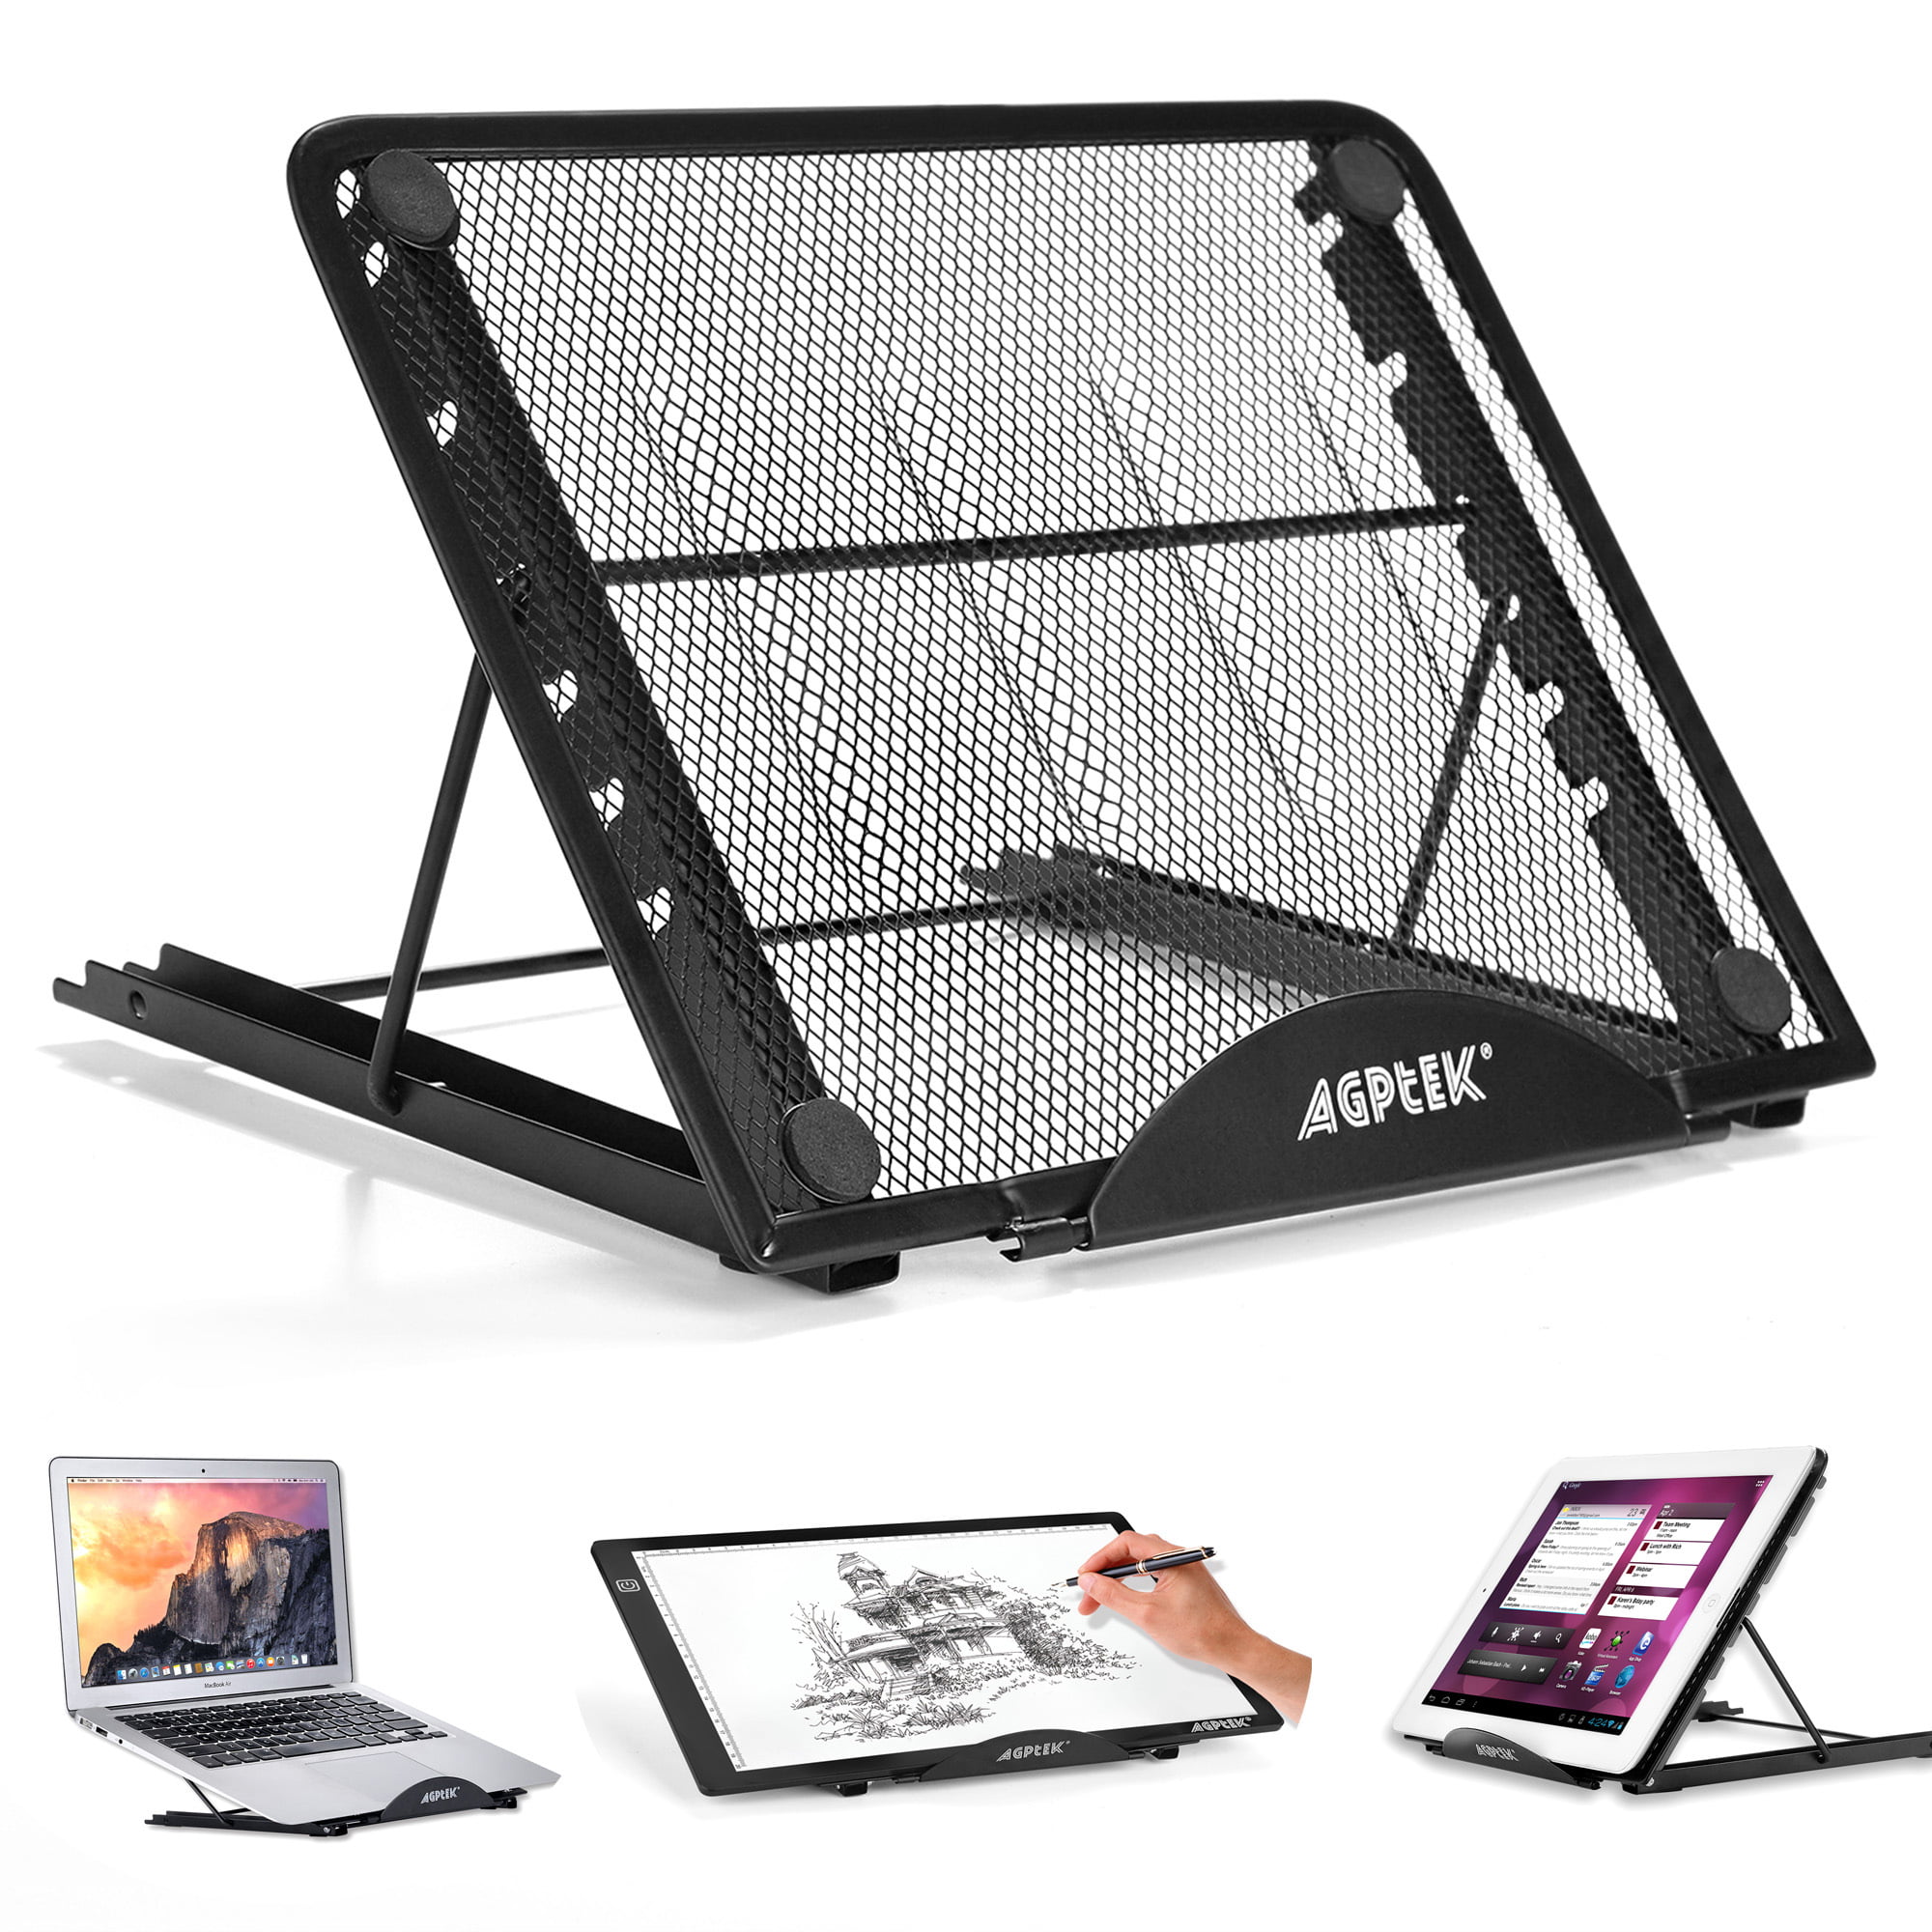 AGPTEK Supporto Regolabile con Rete Metallica ventilata per Pad tracing/Laptop/Tablet/Notebook 